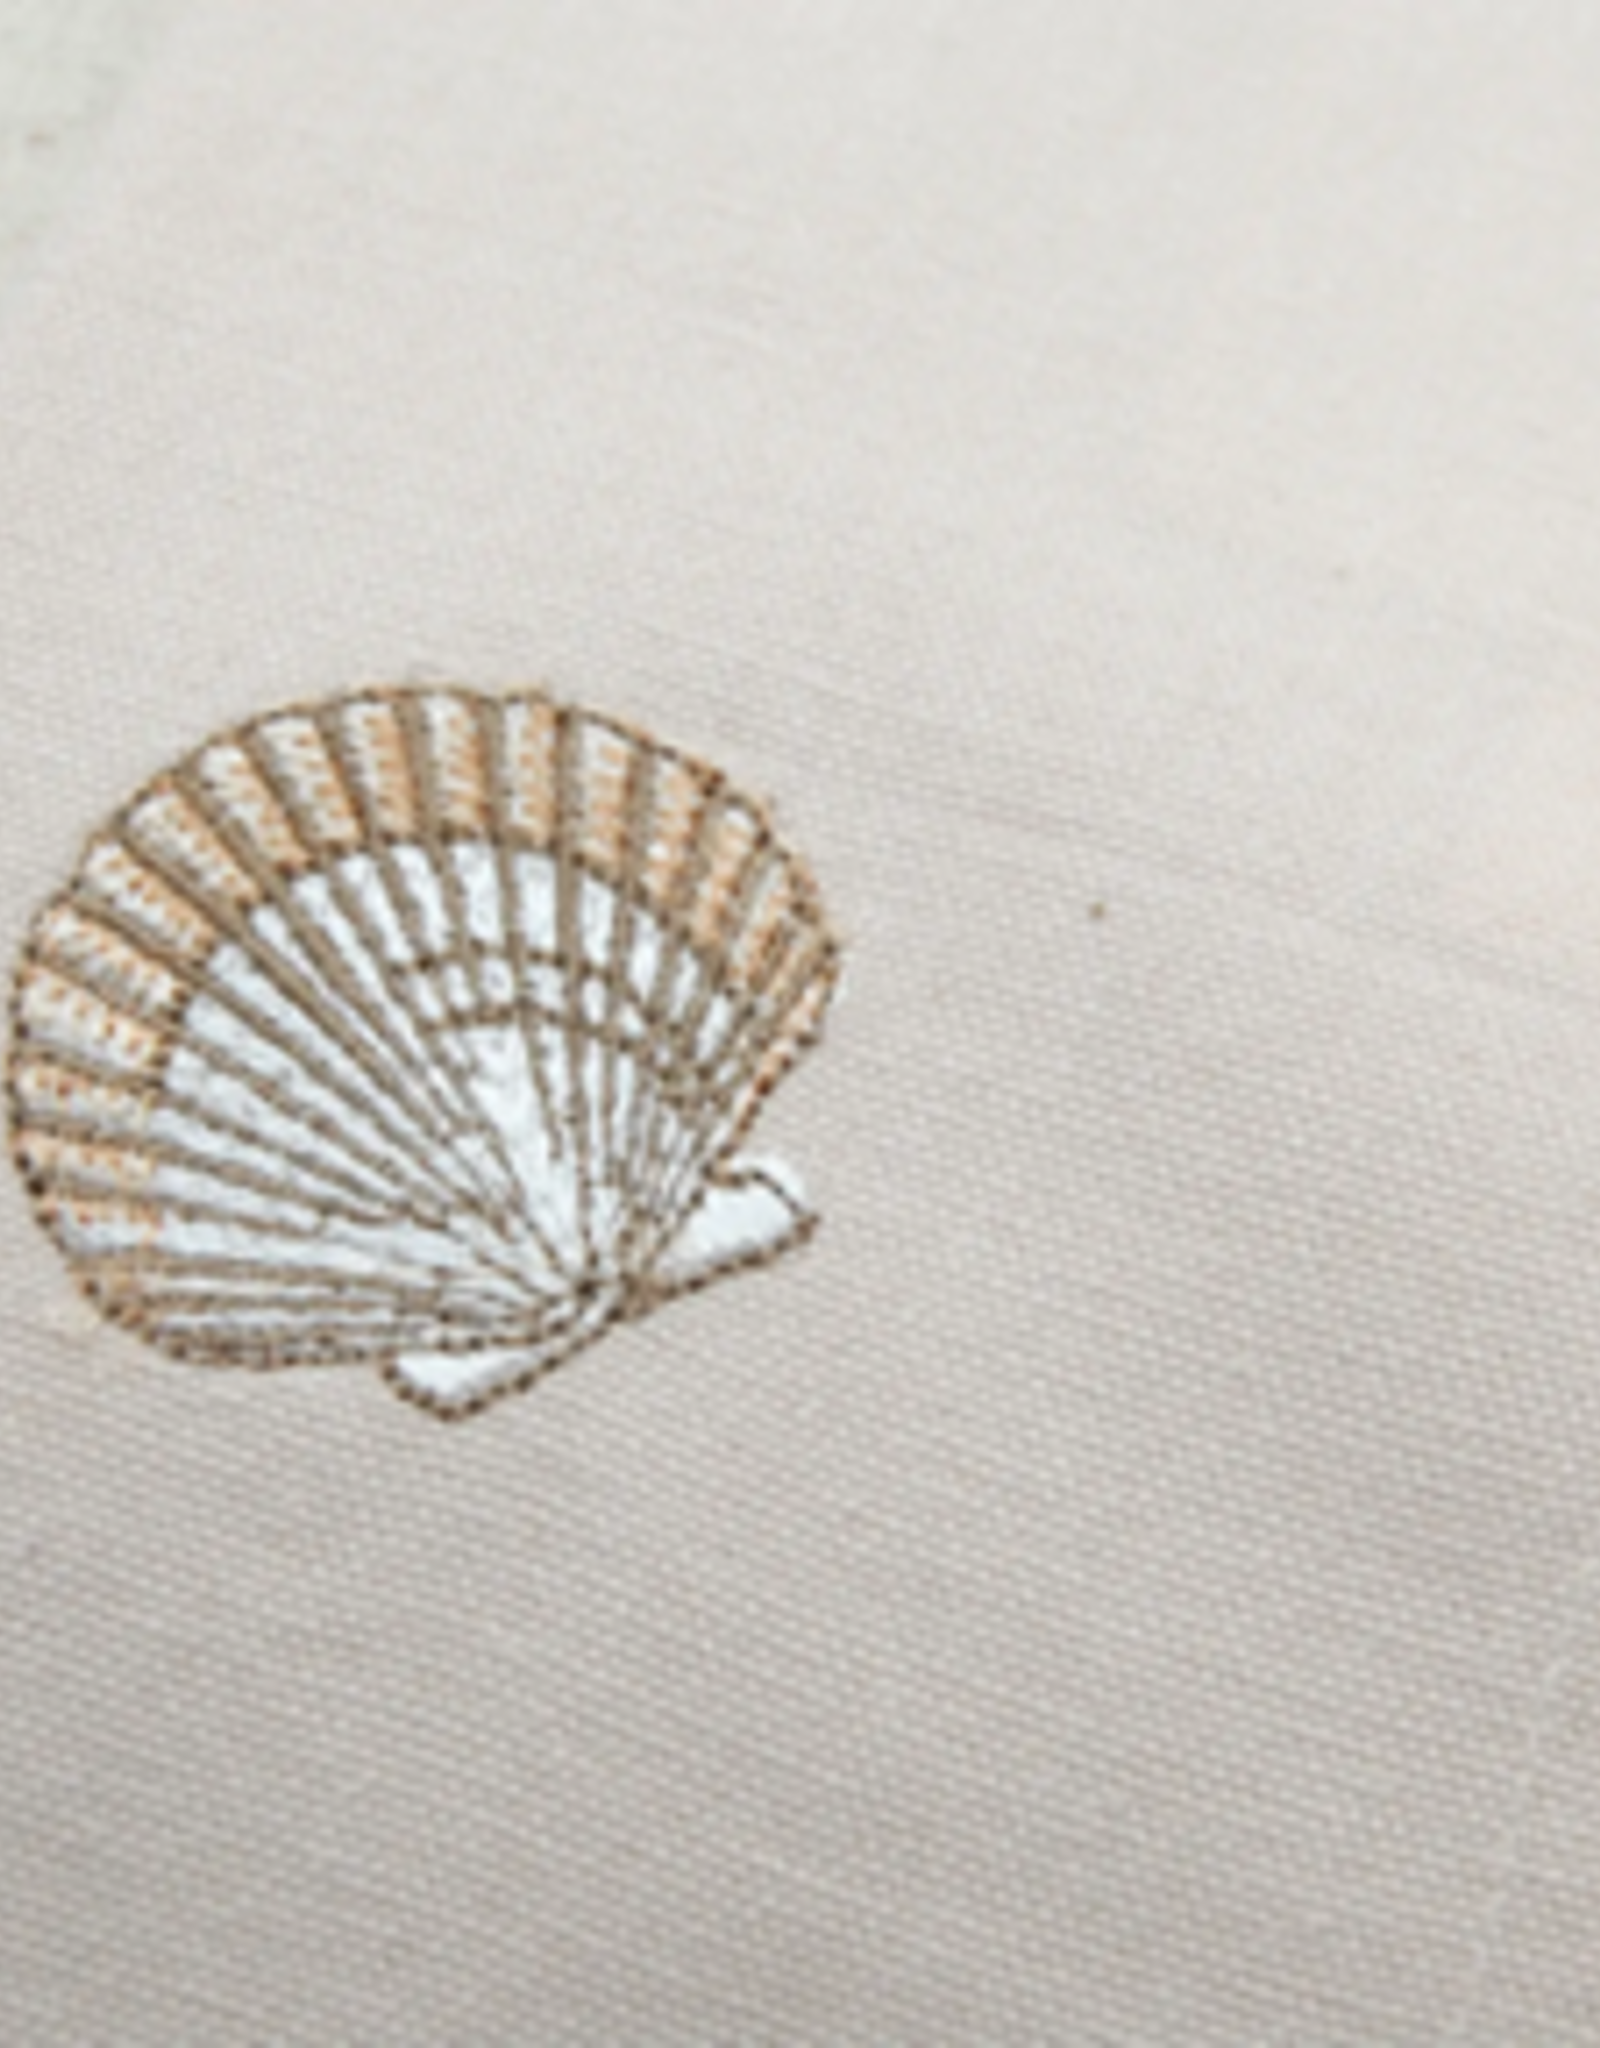 Rightside Design Shells and Sand Napkins